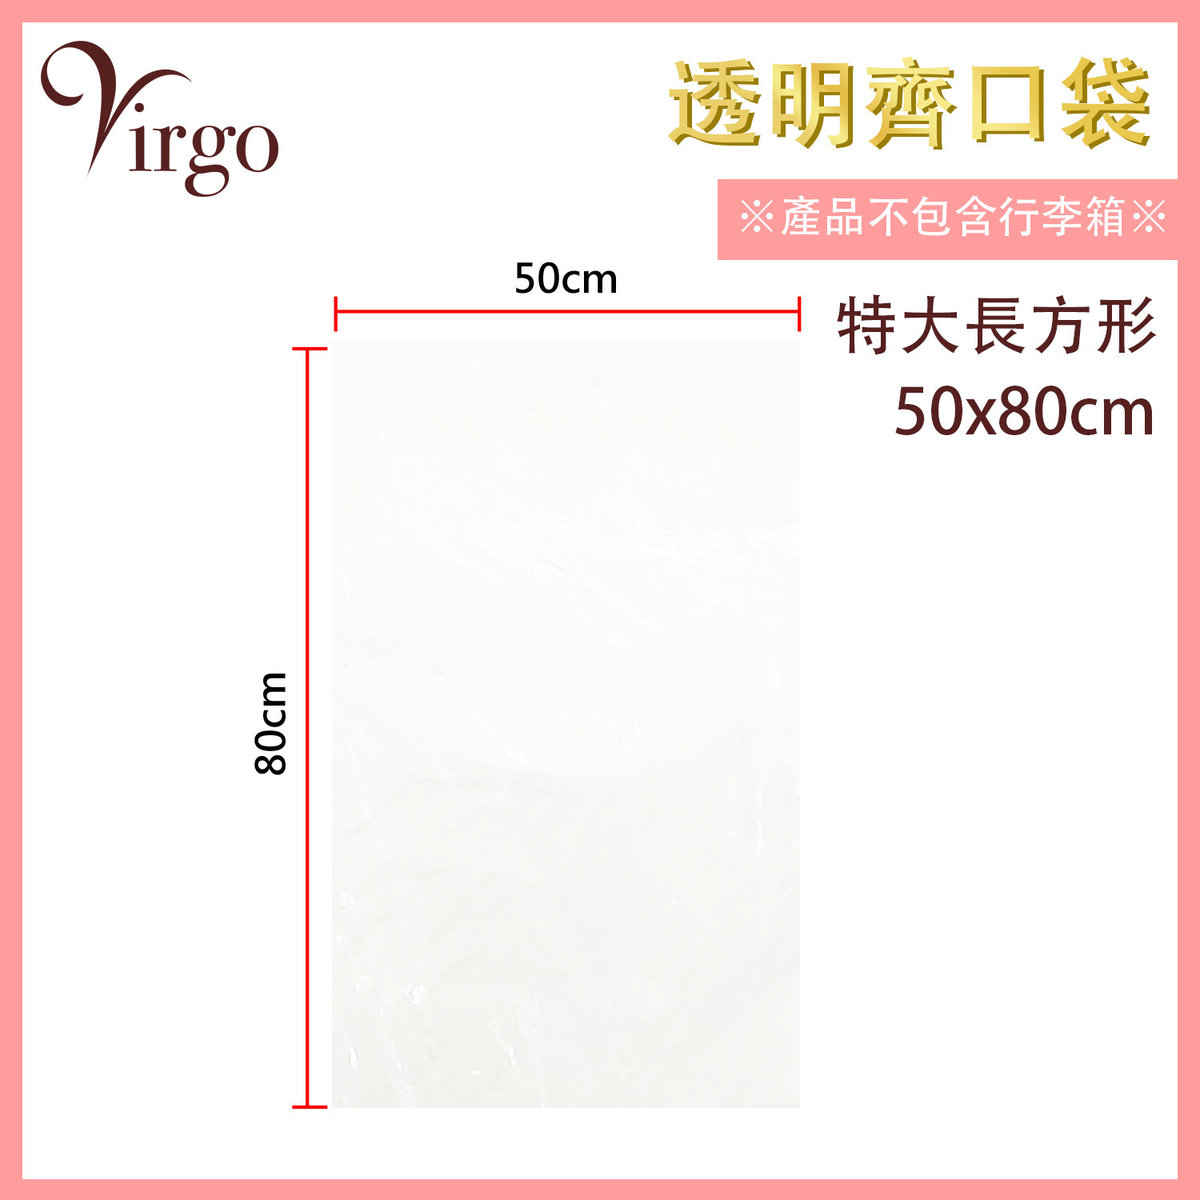 2virgo | 10個50x80cm大透明長方形膠袋加大加厚平口塑料收納袋防蟲